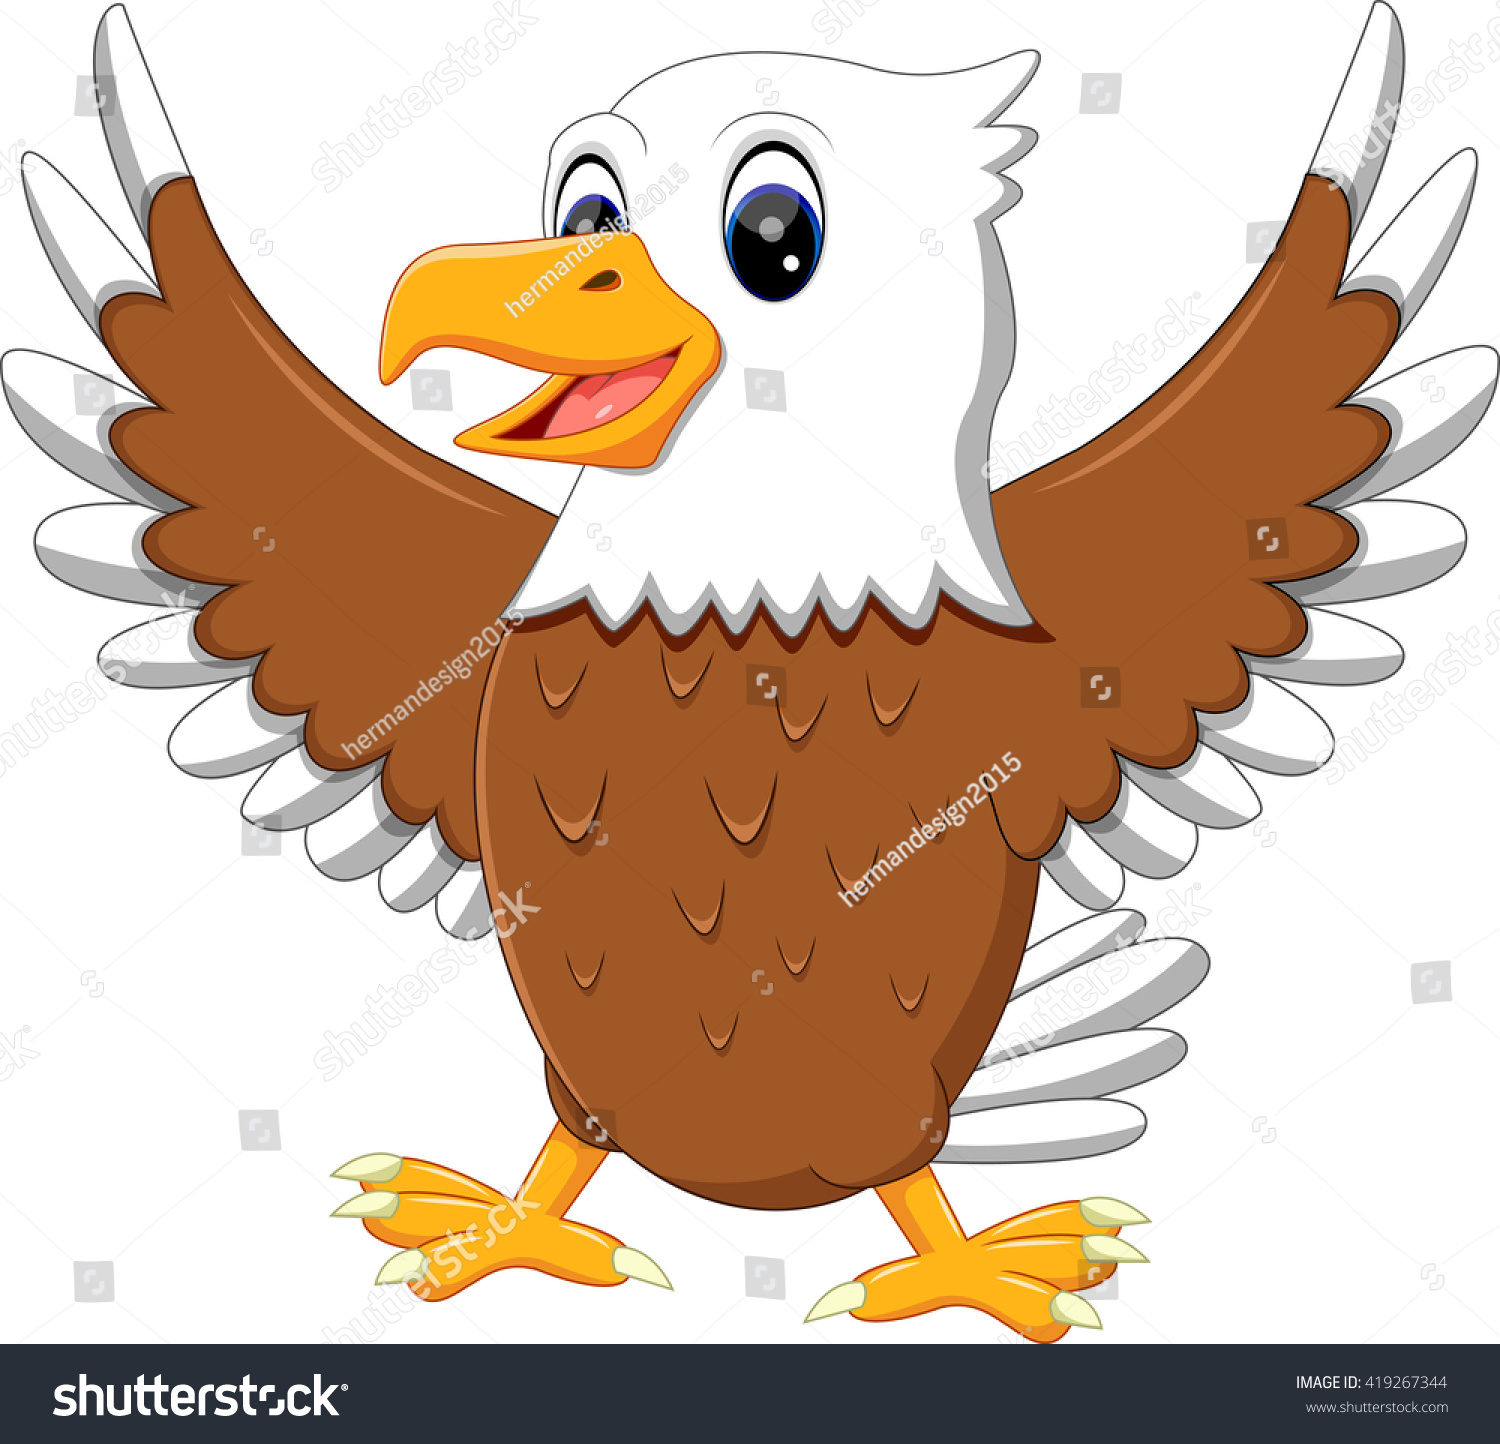 Illustration Cute Eagle Cartoon Stock Vector 419267344 - Shutterstock